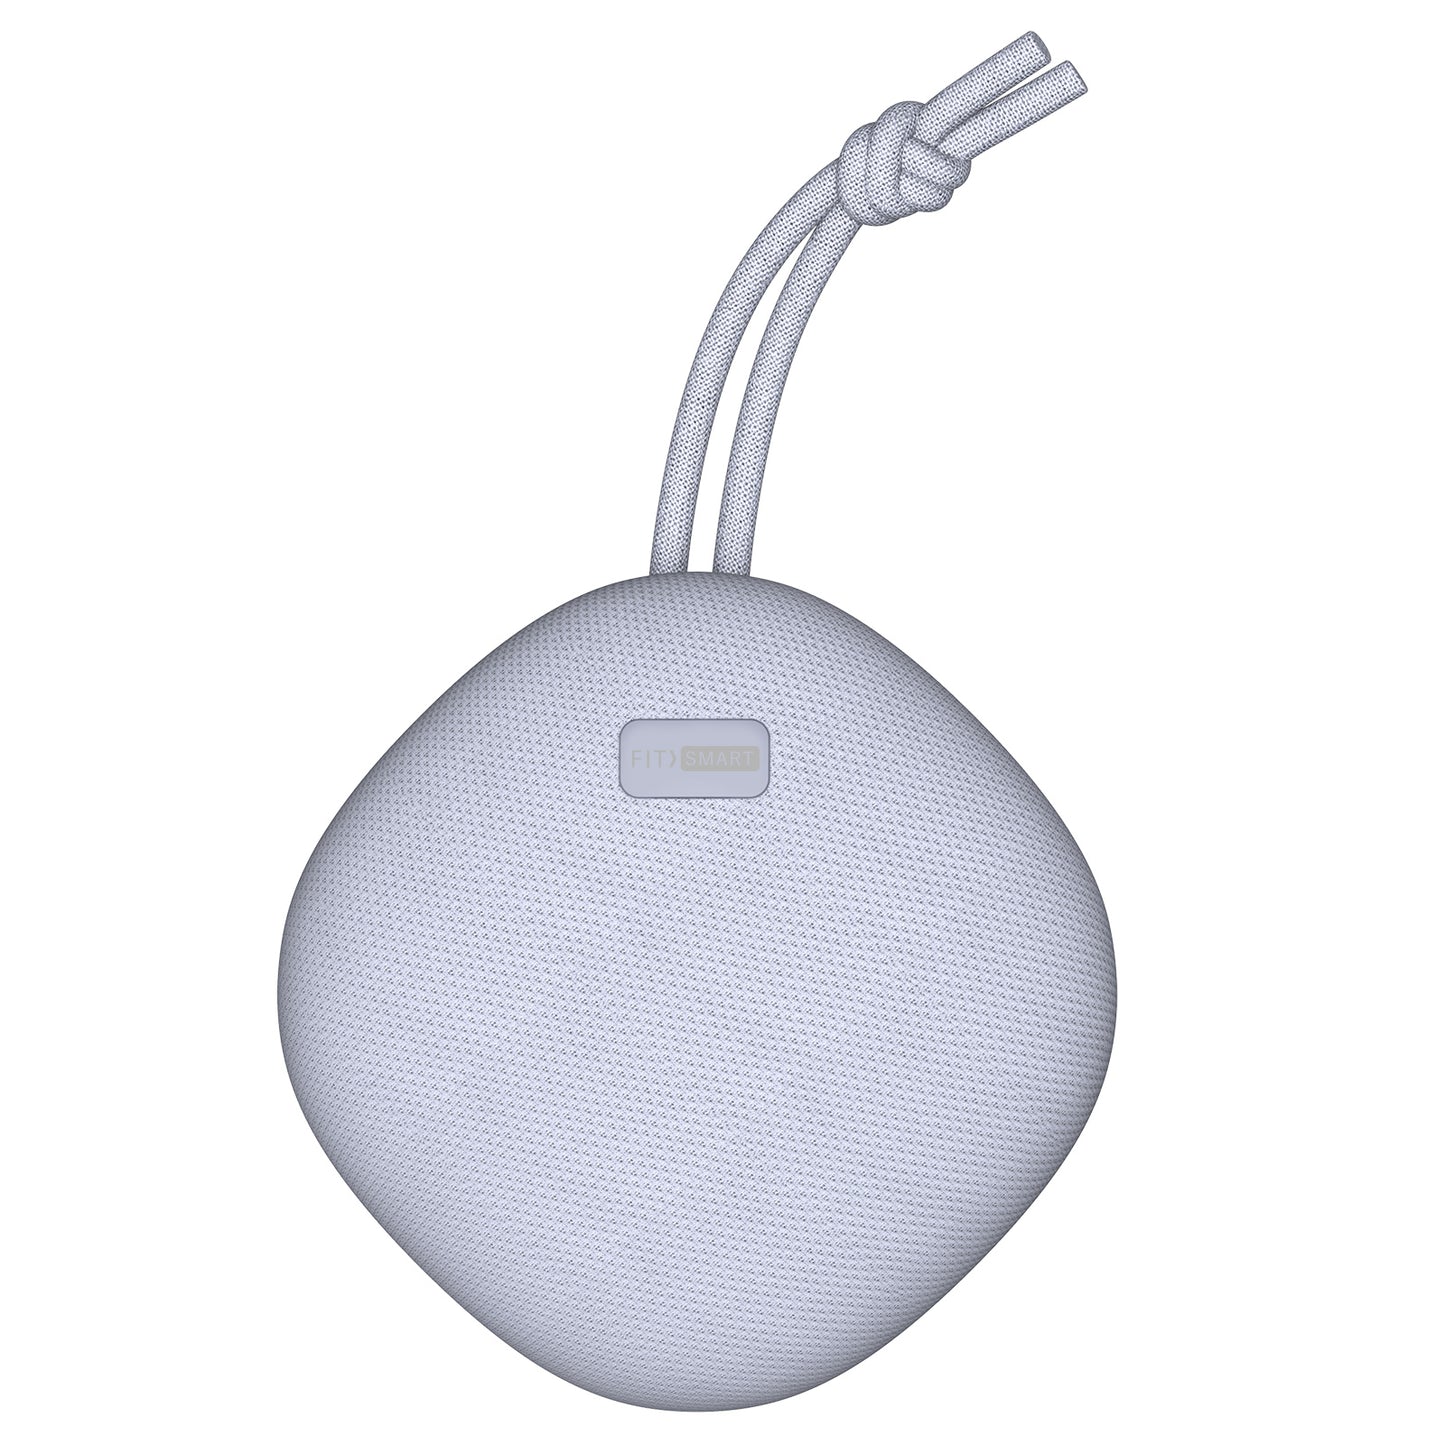 FitSmart Waterproof Bluetooth Speaker Portable Wireless Stereo Sound